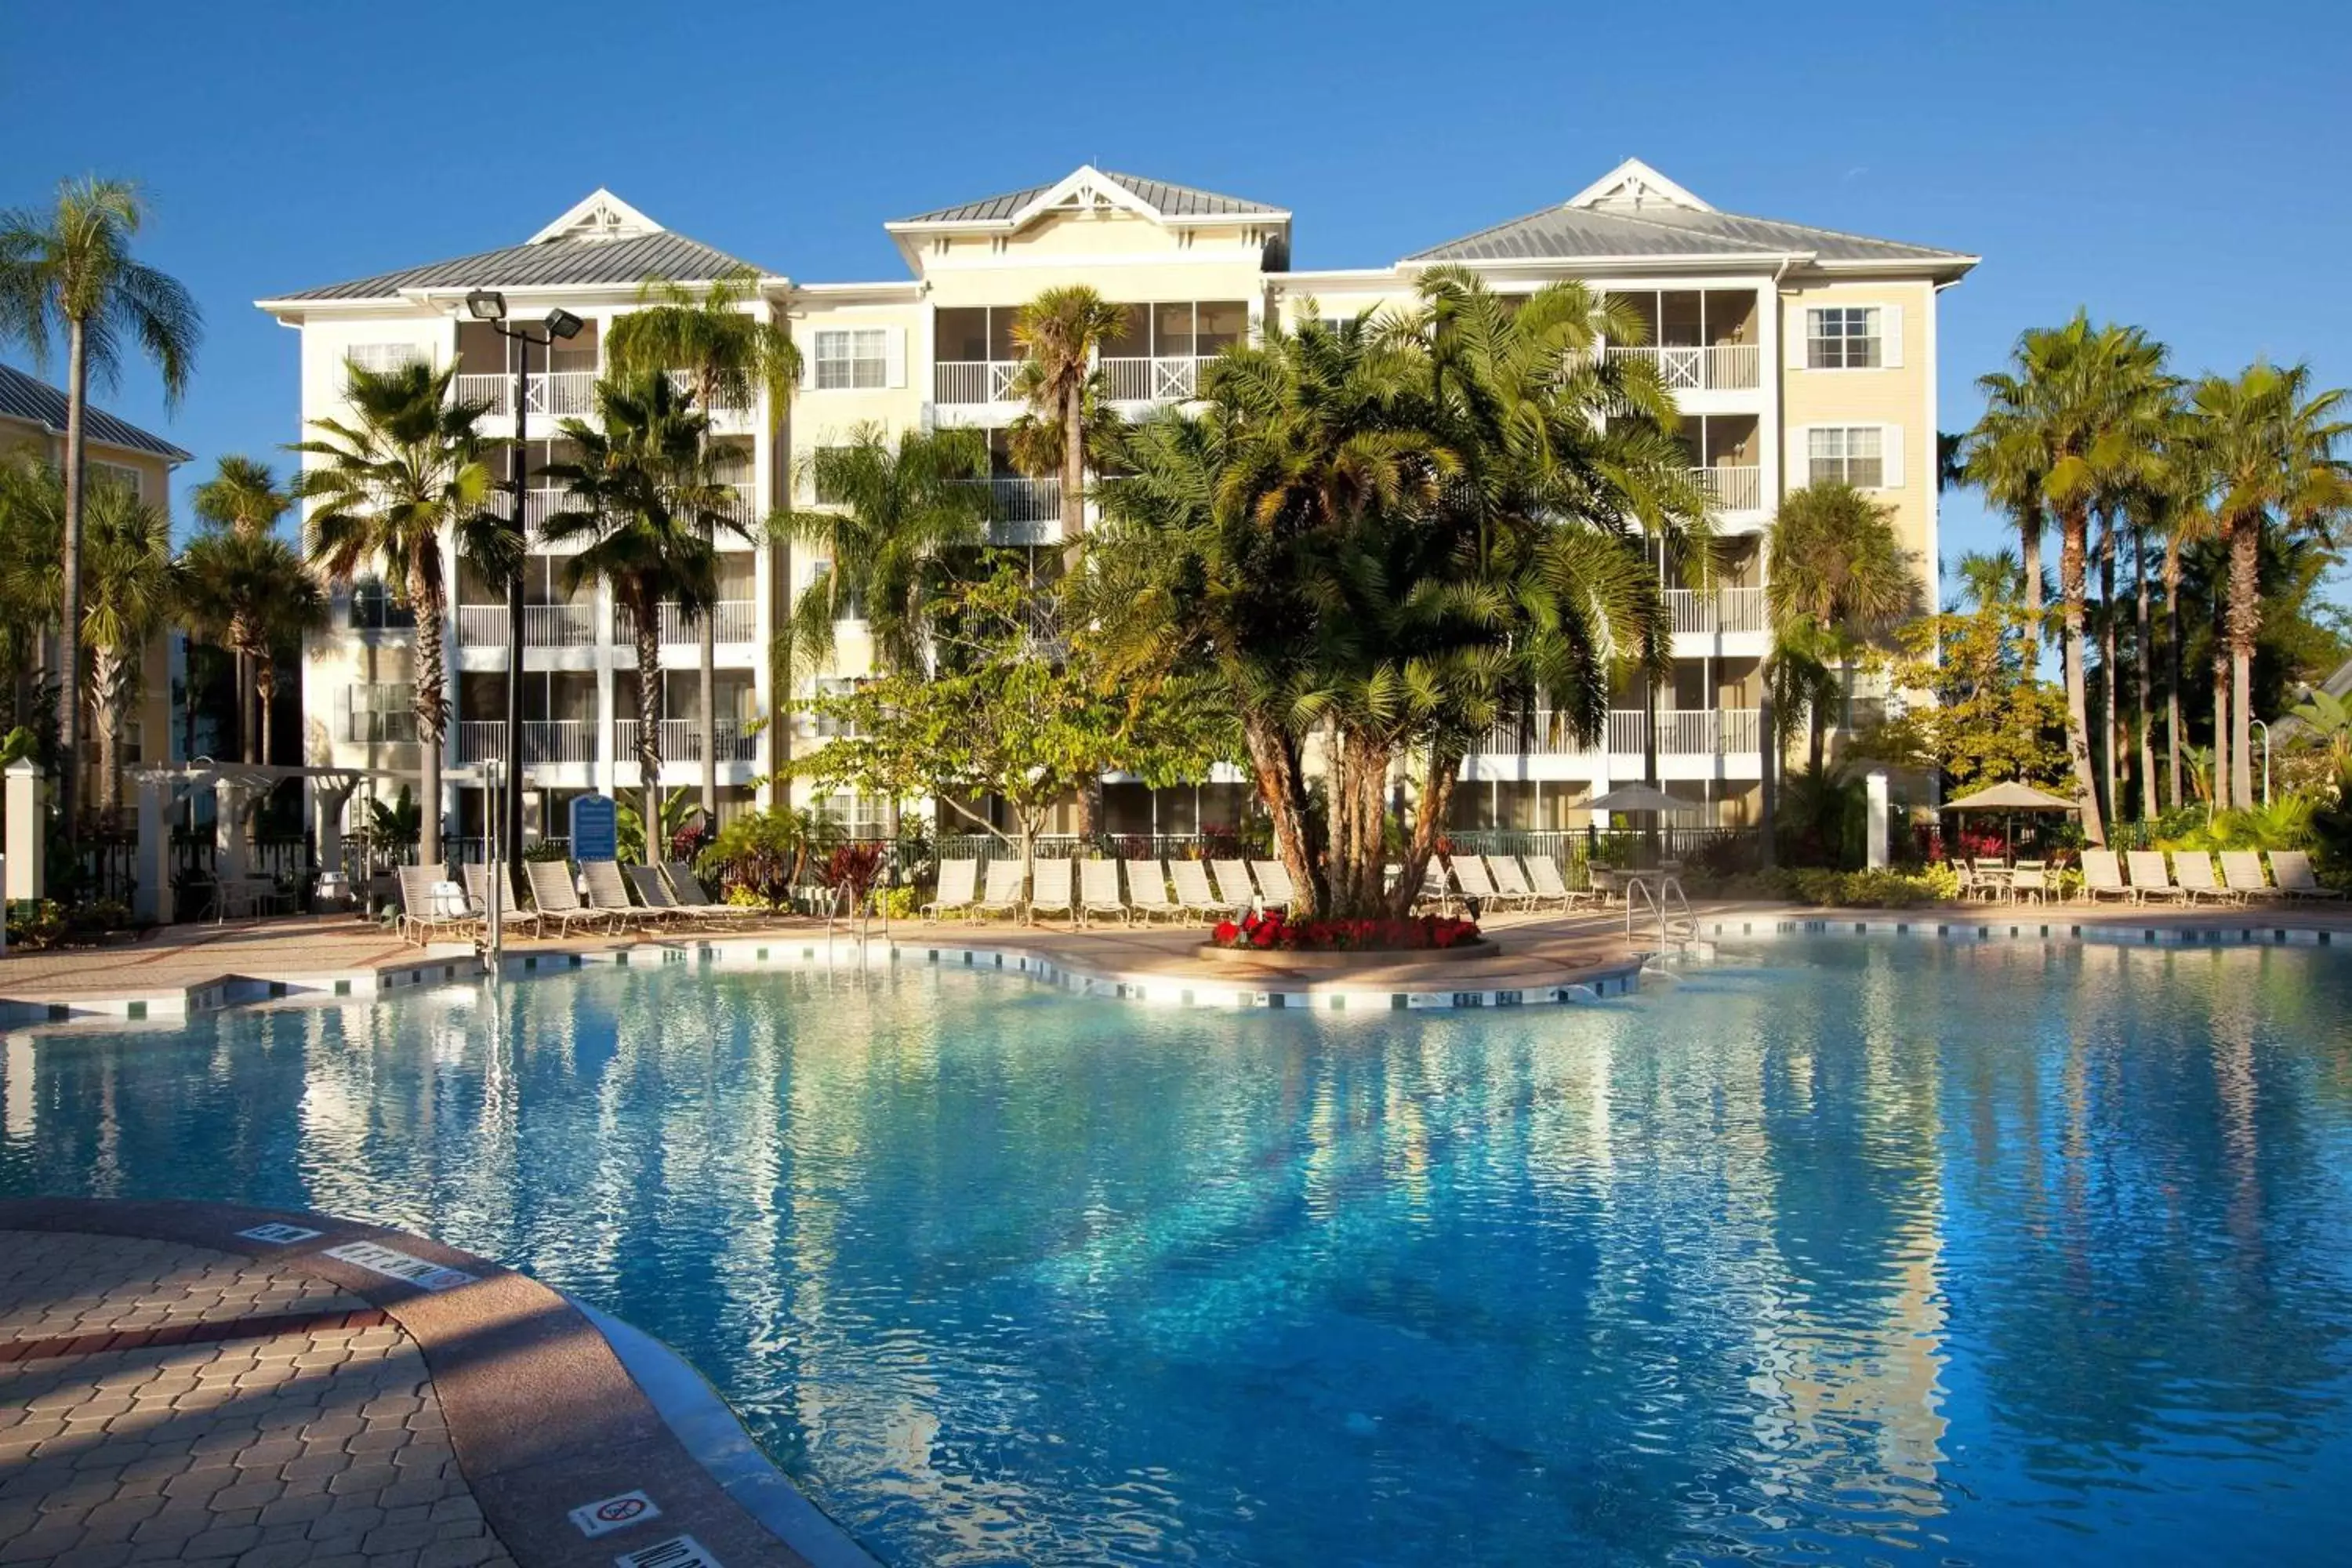 Swimming Pool in Sheraton Vistana Villages Resort Villas, I-Drive Orlando